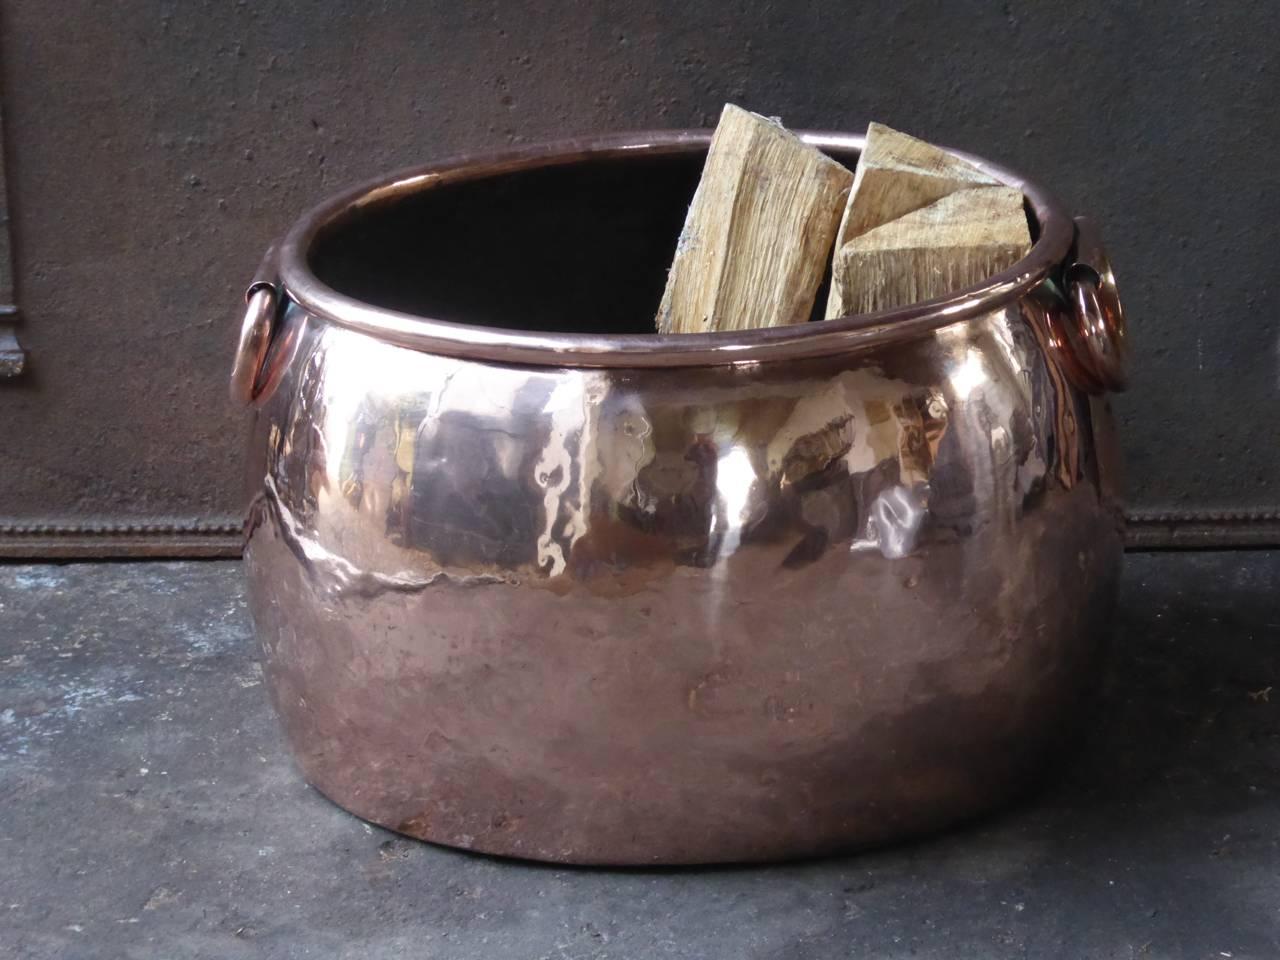 18th century English log bin - firewood holder made of polished copper.